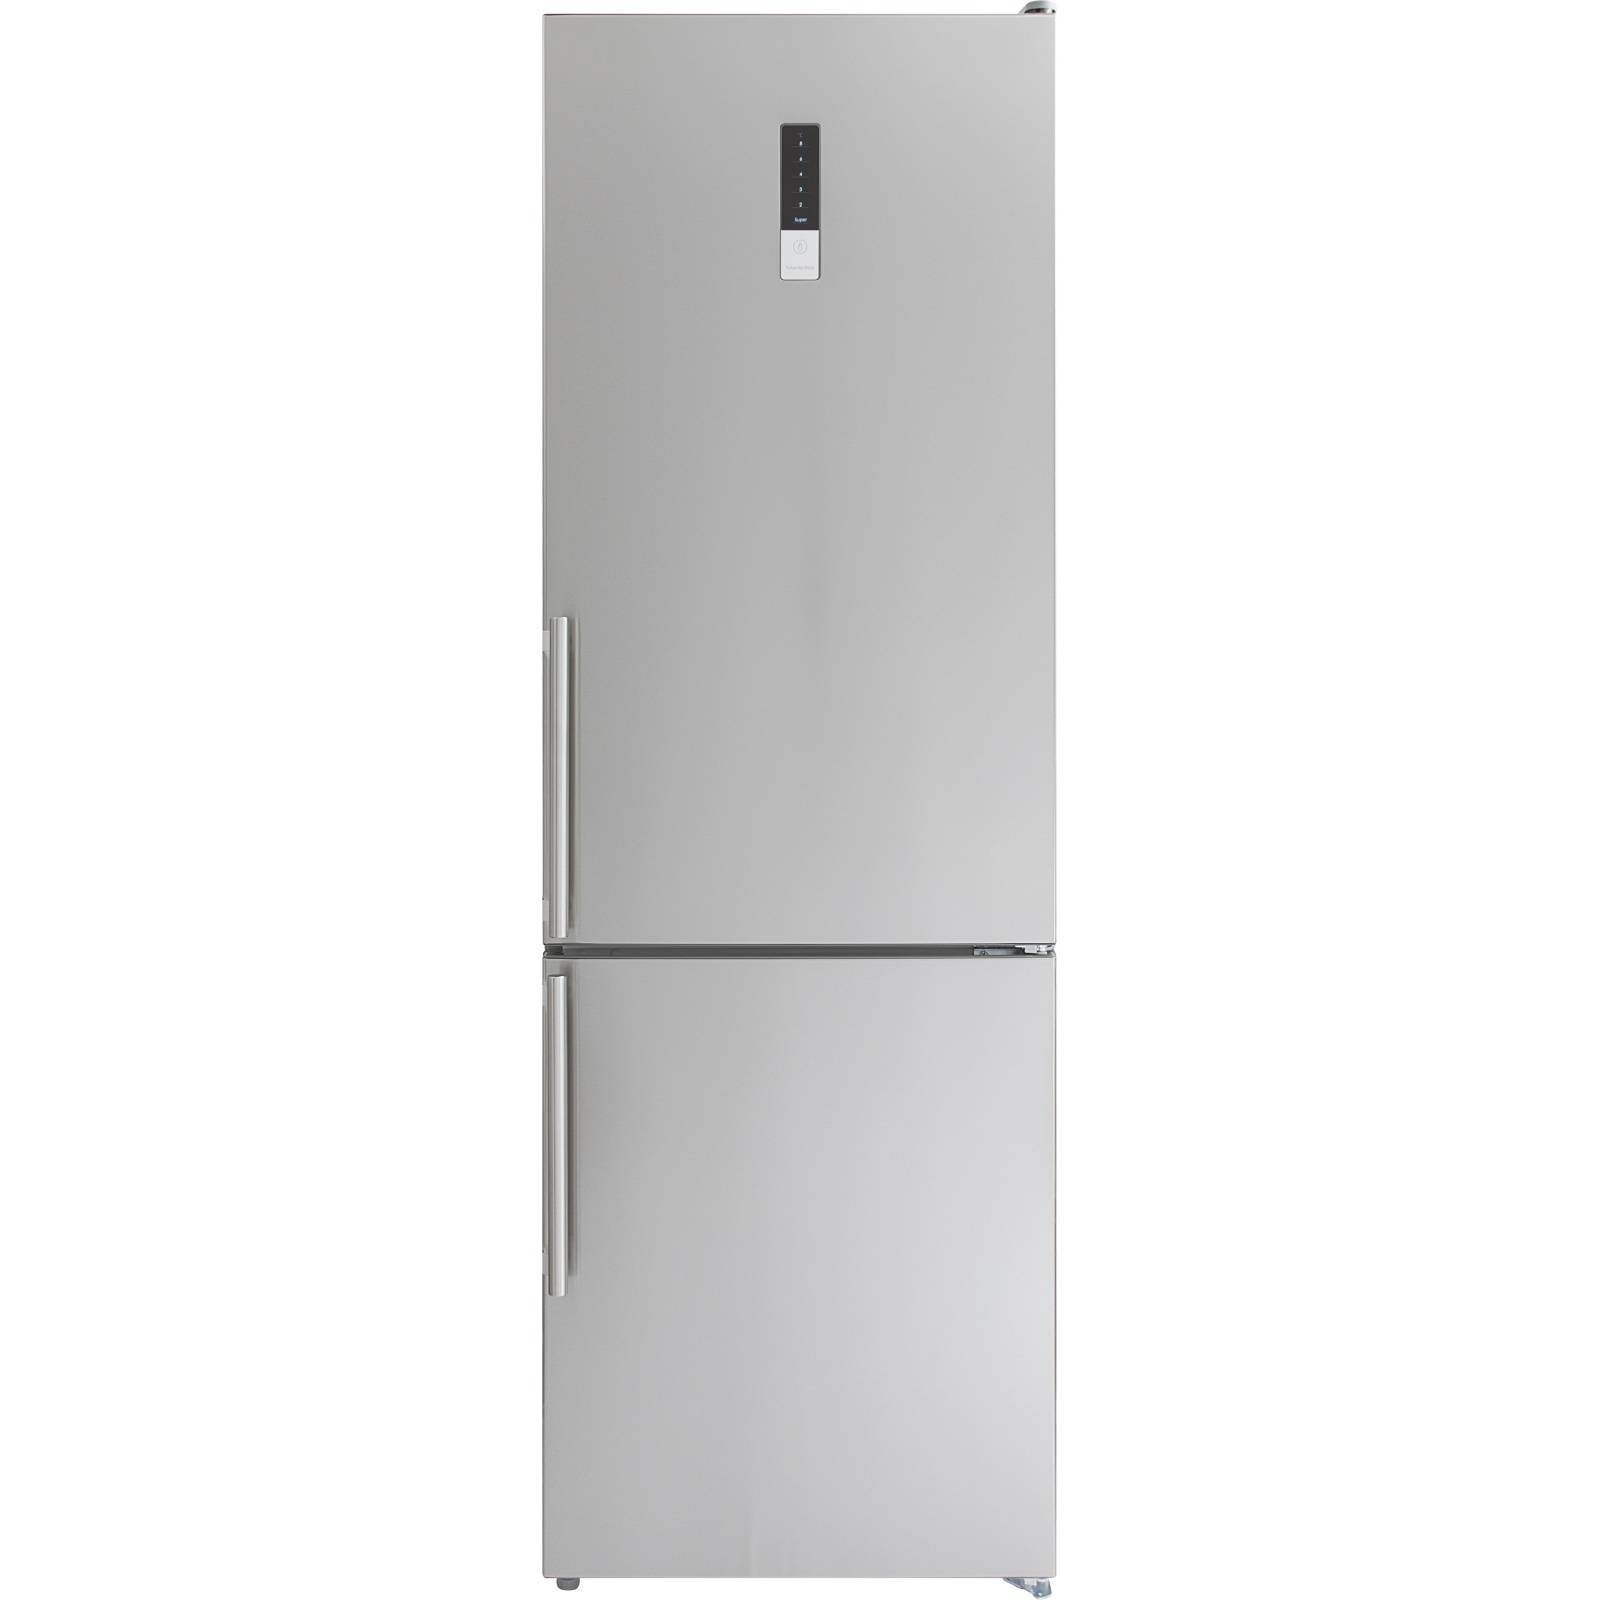 Refrigerador Teka Linea Blanca Nfl 340 Inox 40672012